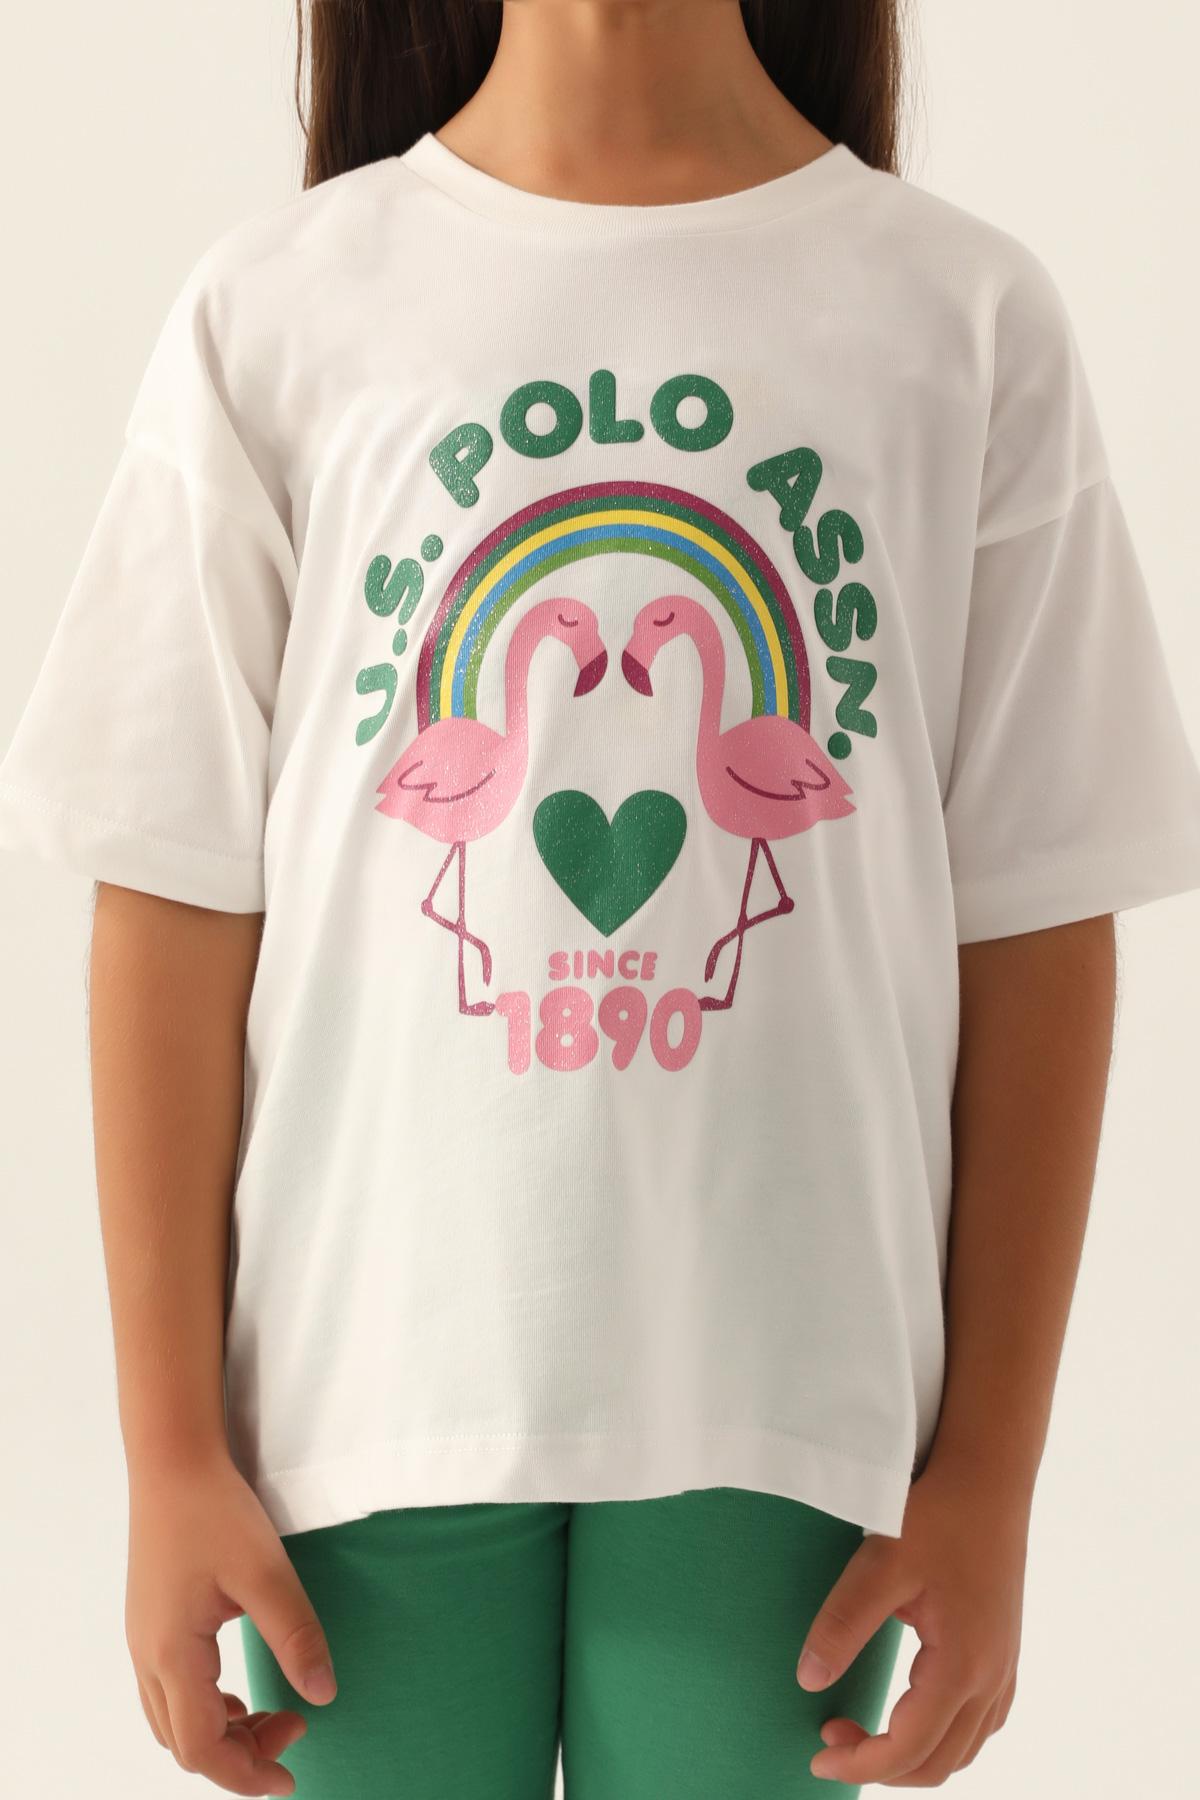 Selected image for U.S. Polo Assn. Komplet za devojčice US1841-G, Belo-zeleni